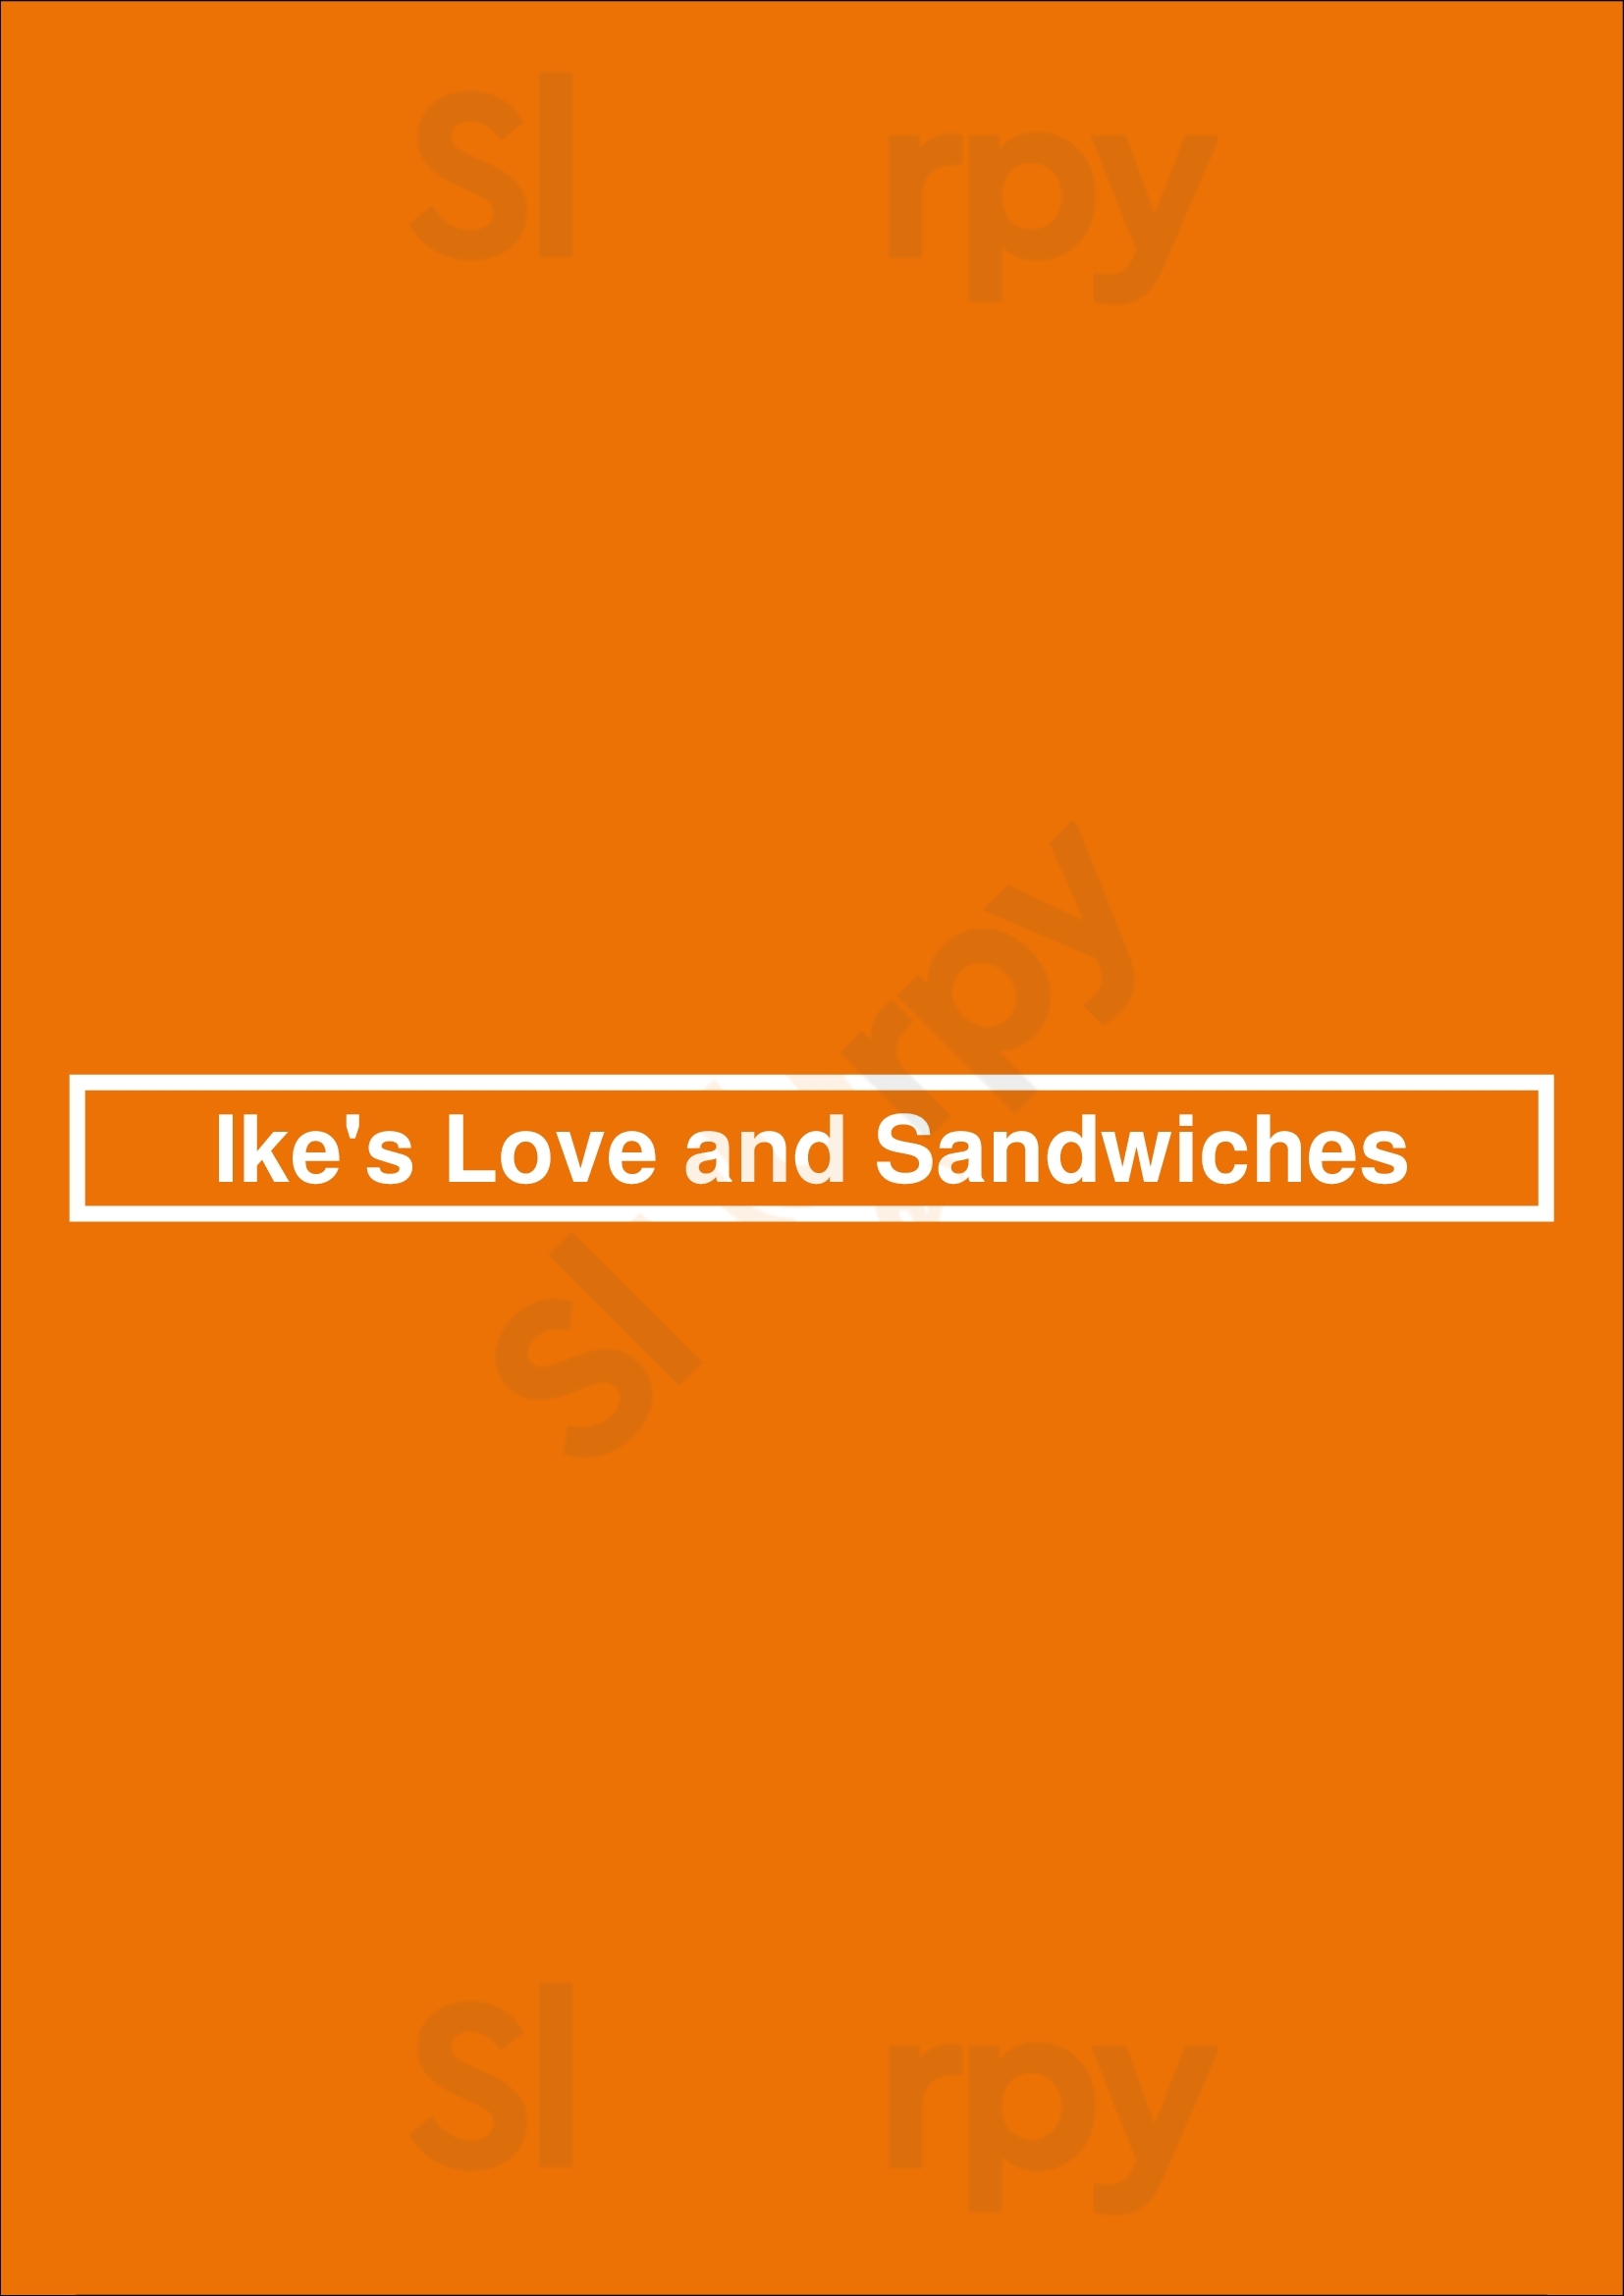 Ike's Love And Sandwiches Newport Beach Menu - 1